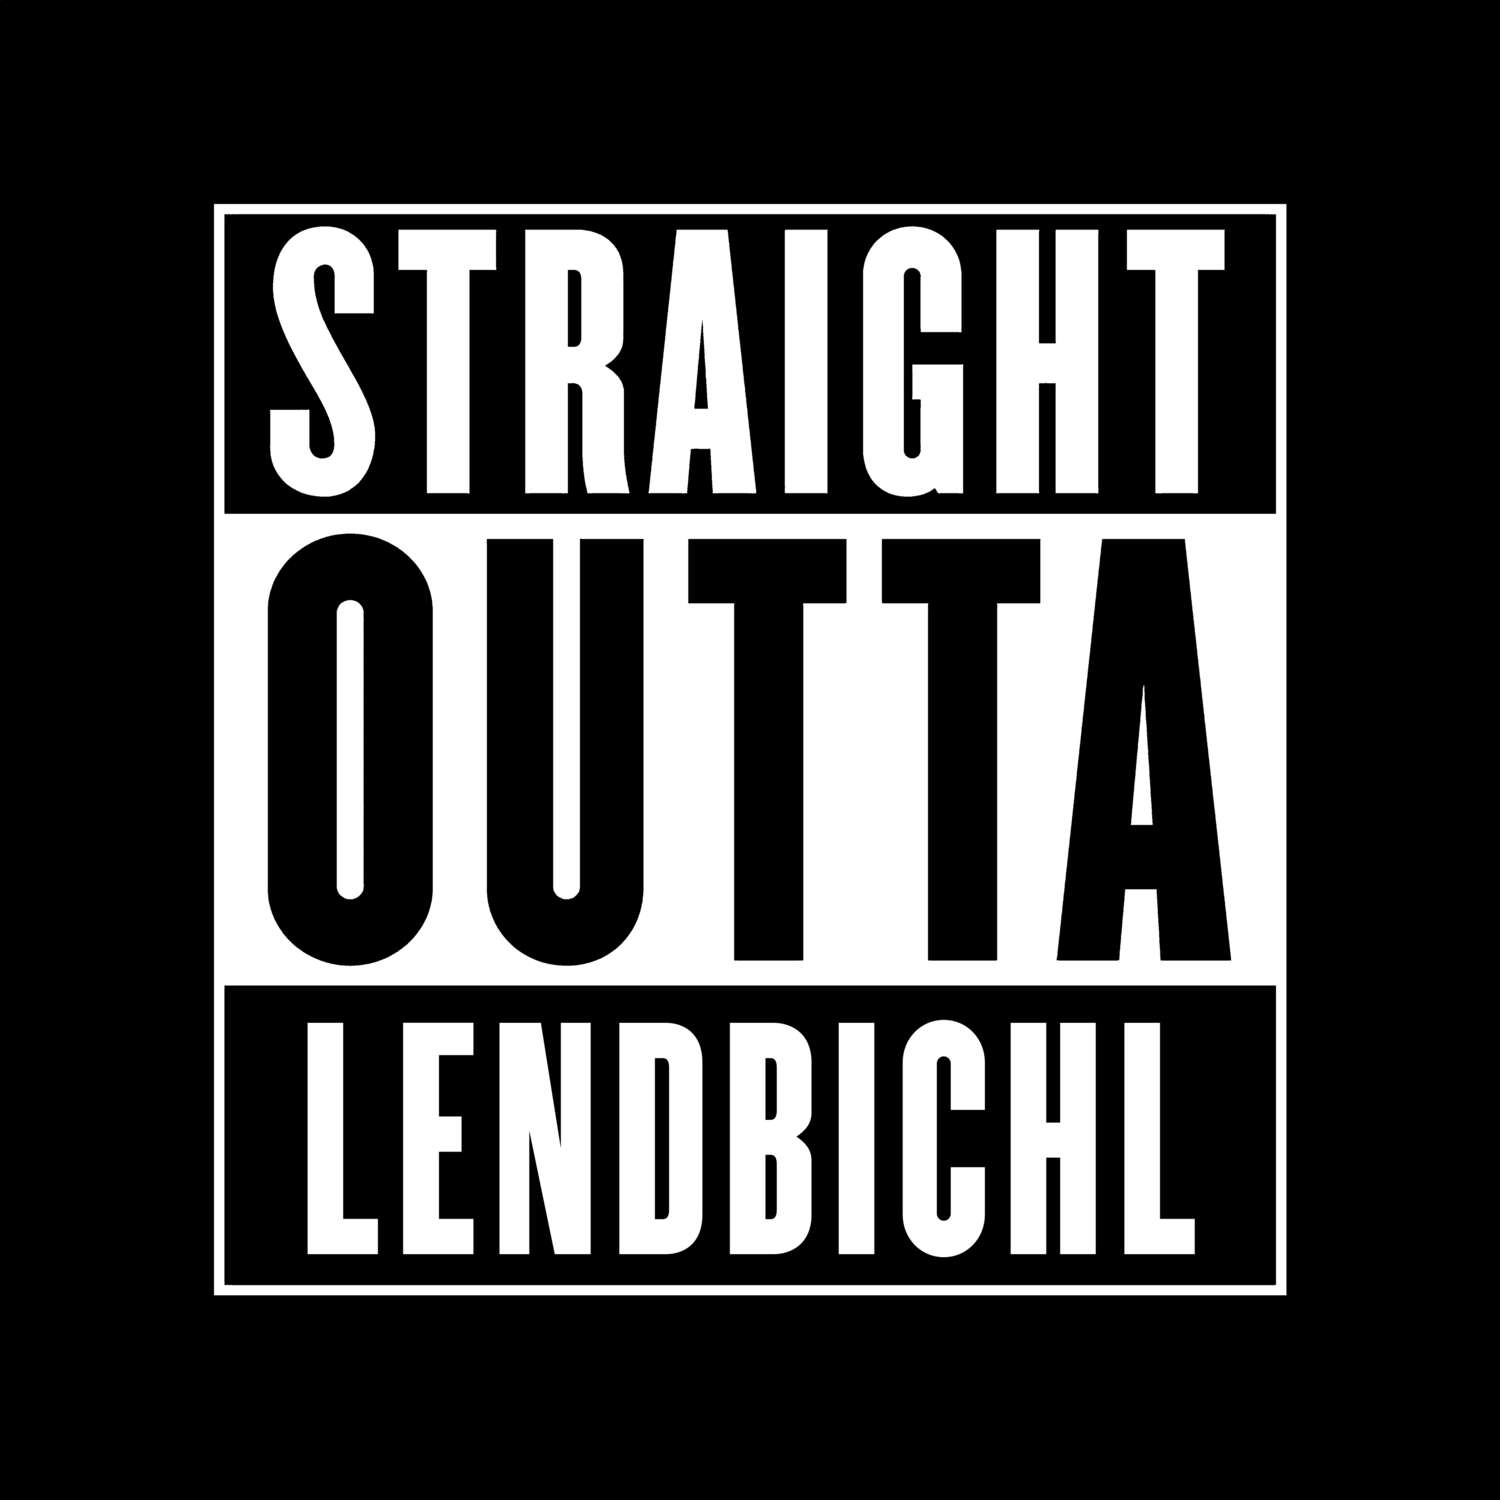 Lendbichl T-Shirt »Straight Outta«